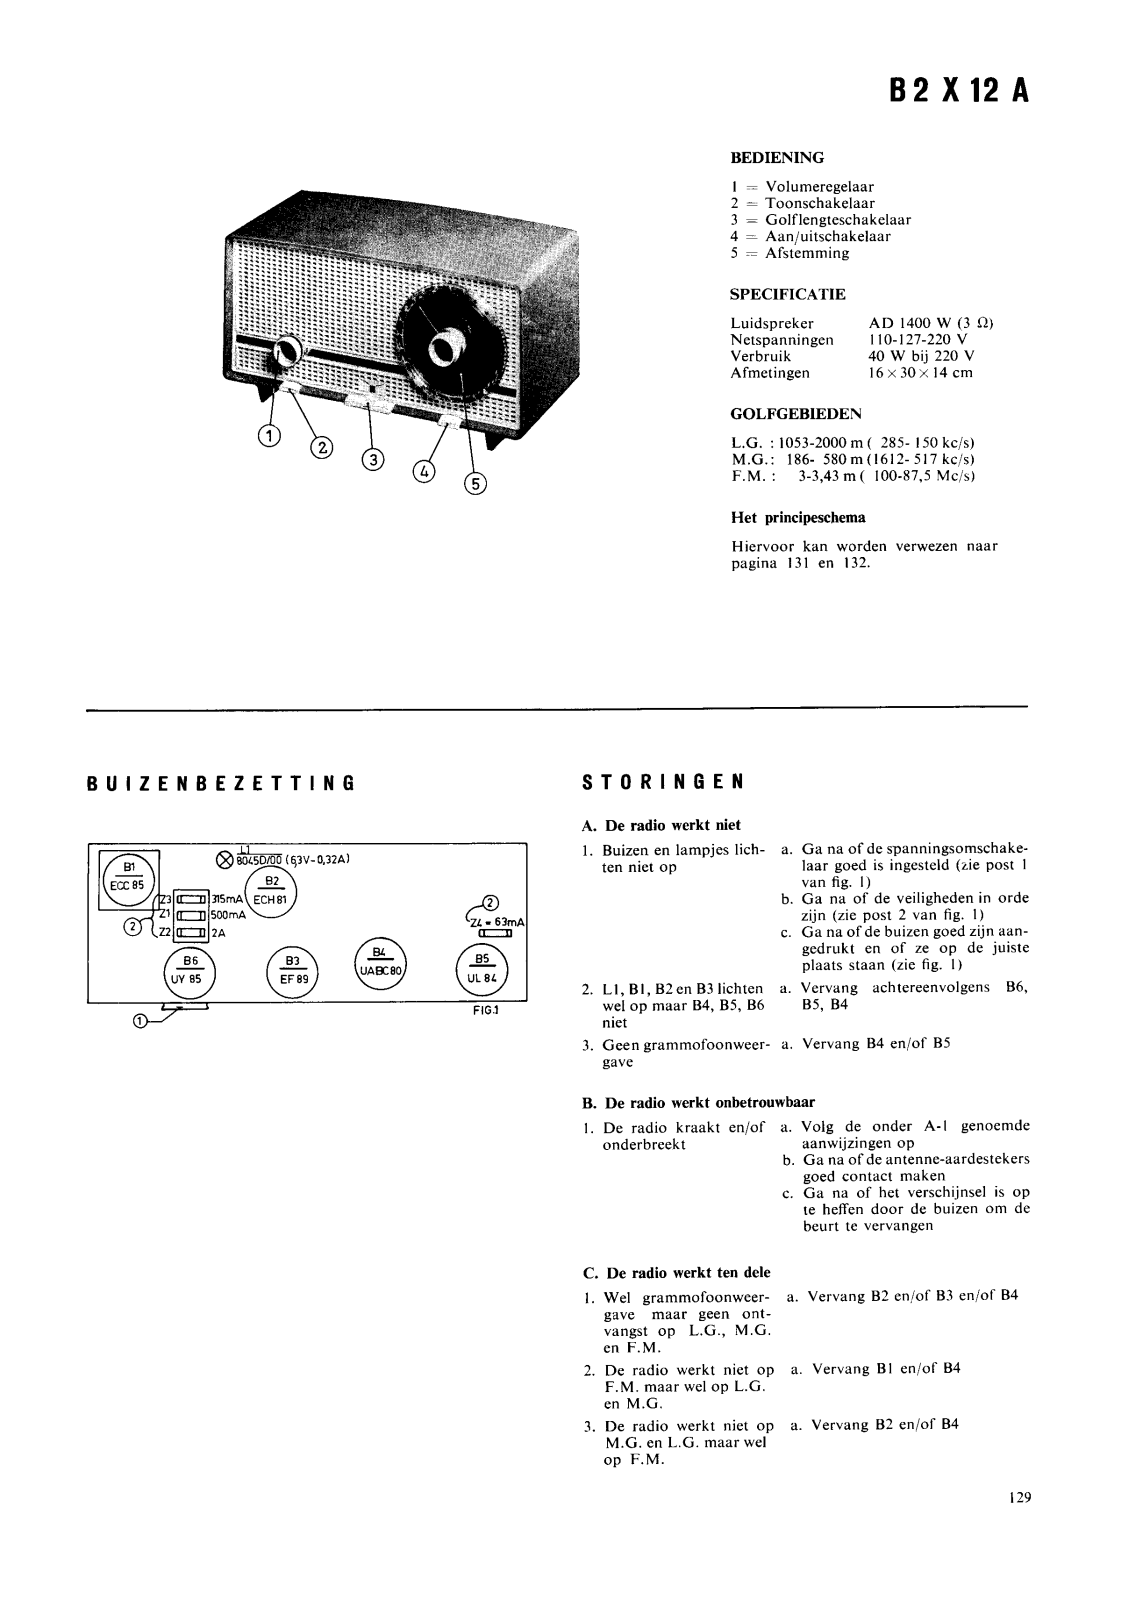 Philips B2X12A Service manual